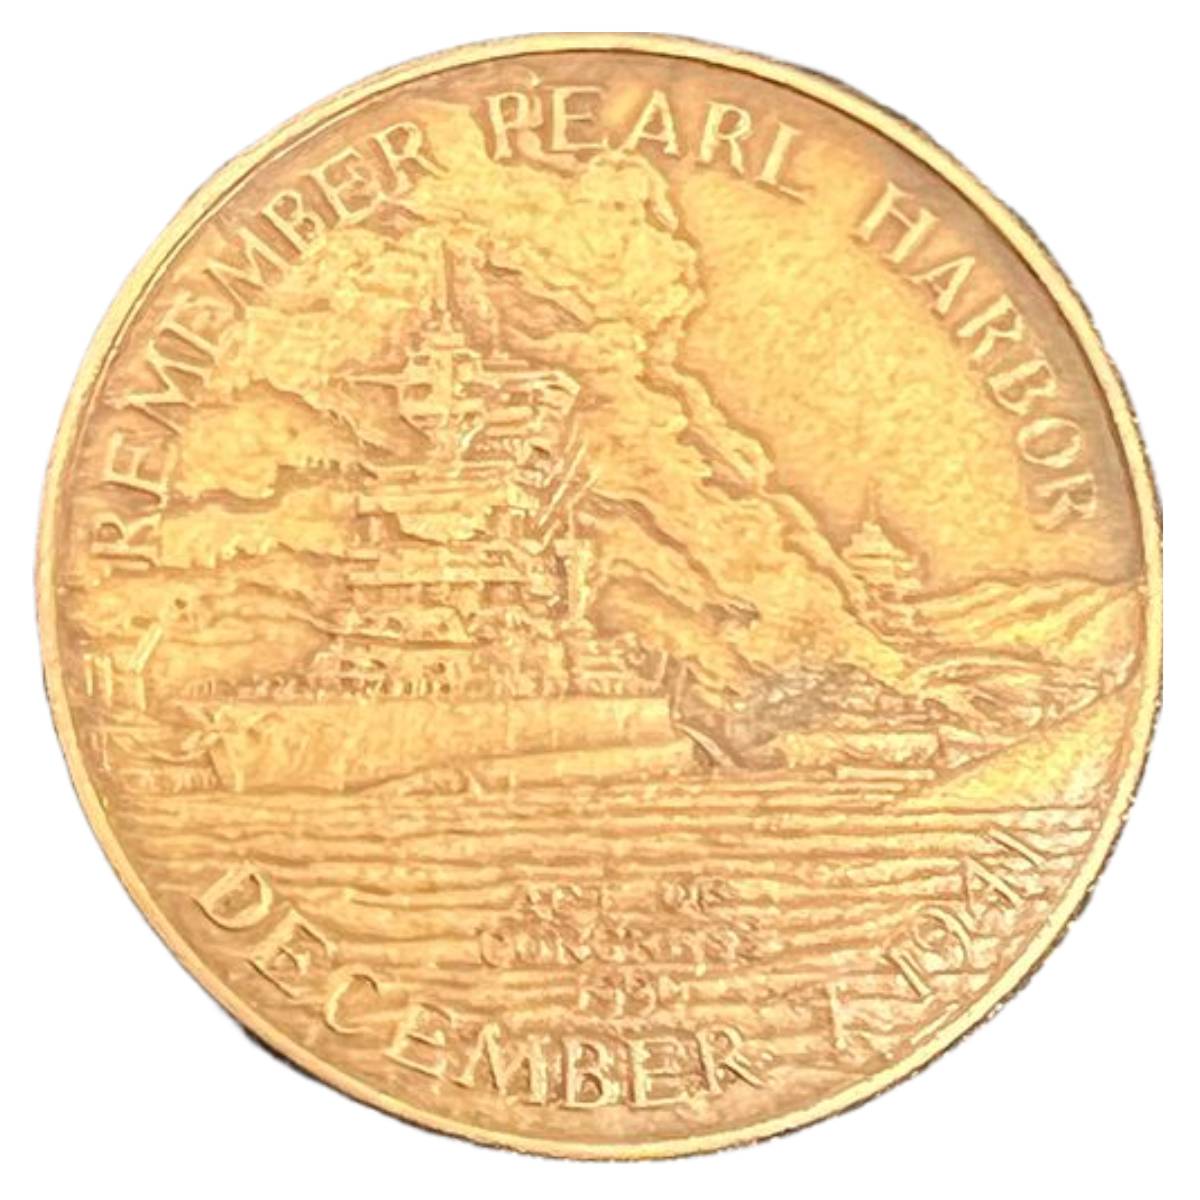 Pearl Harbor Commemorative Medal